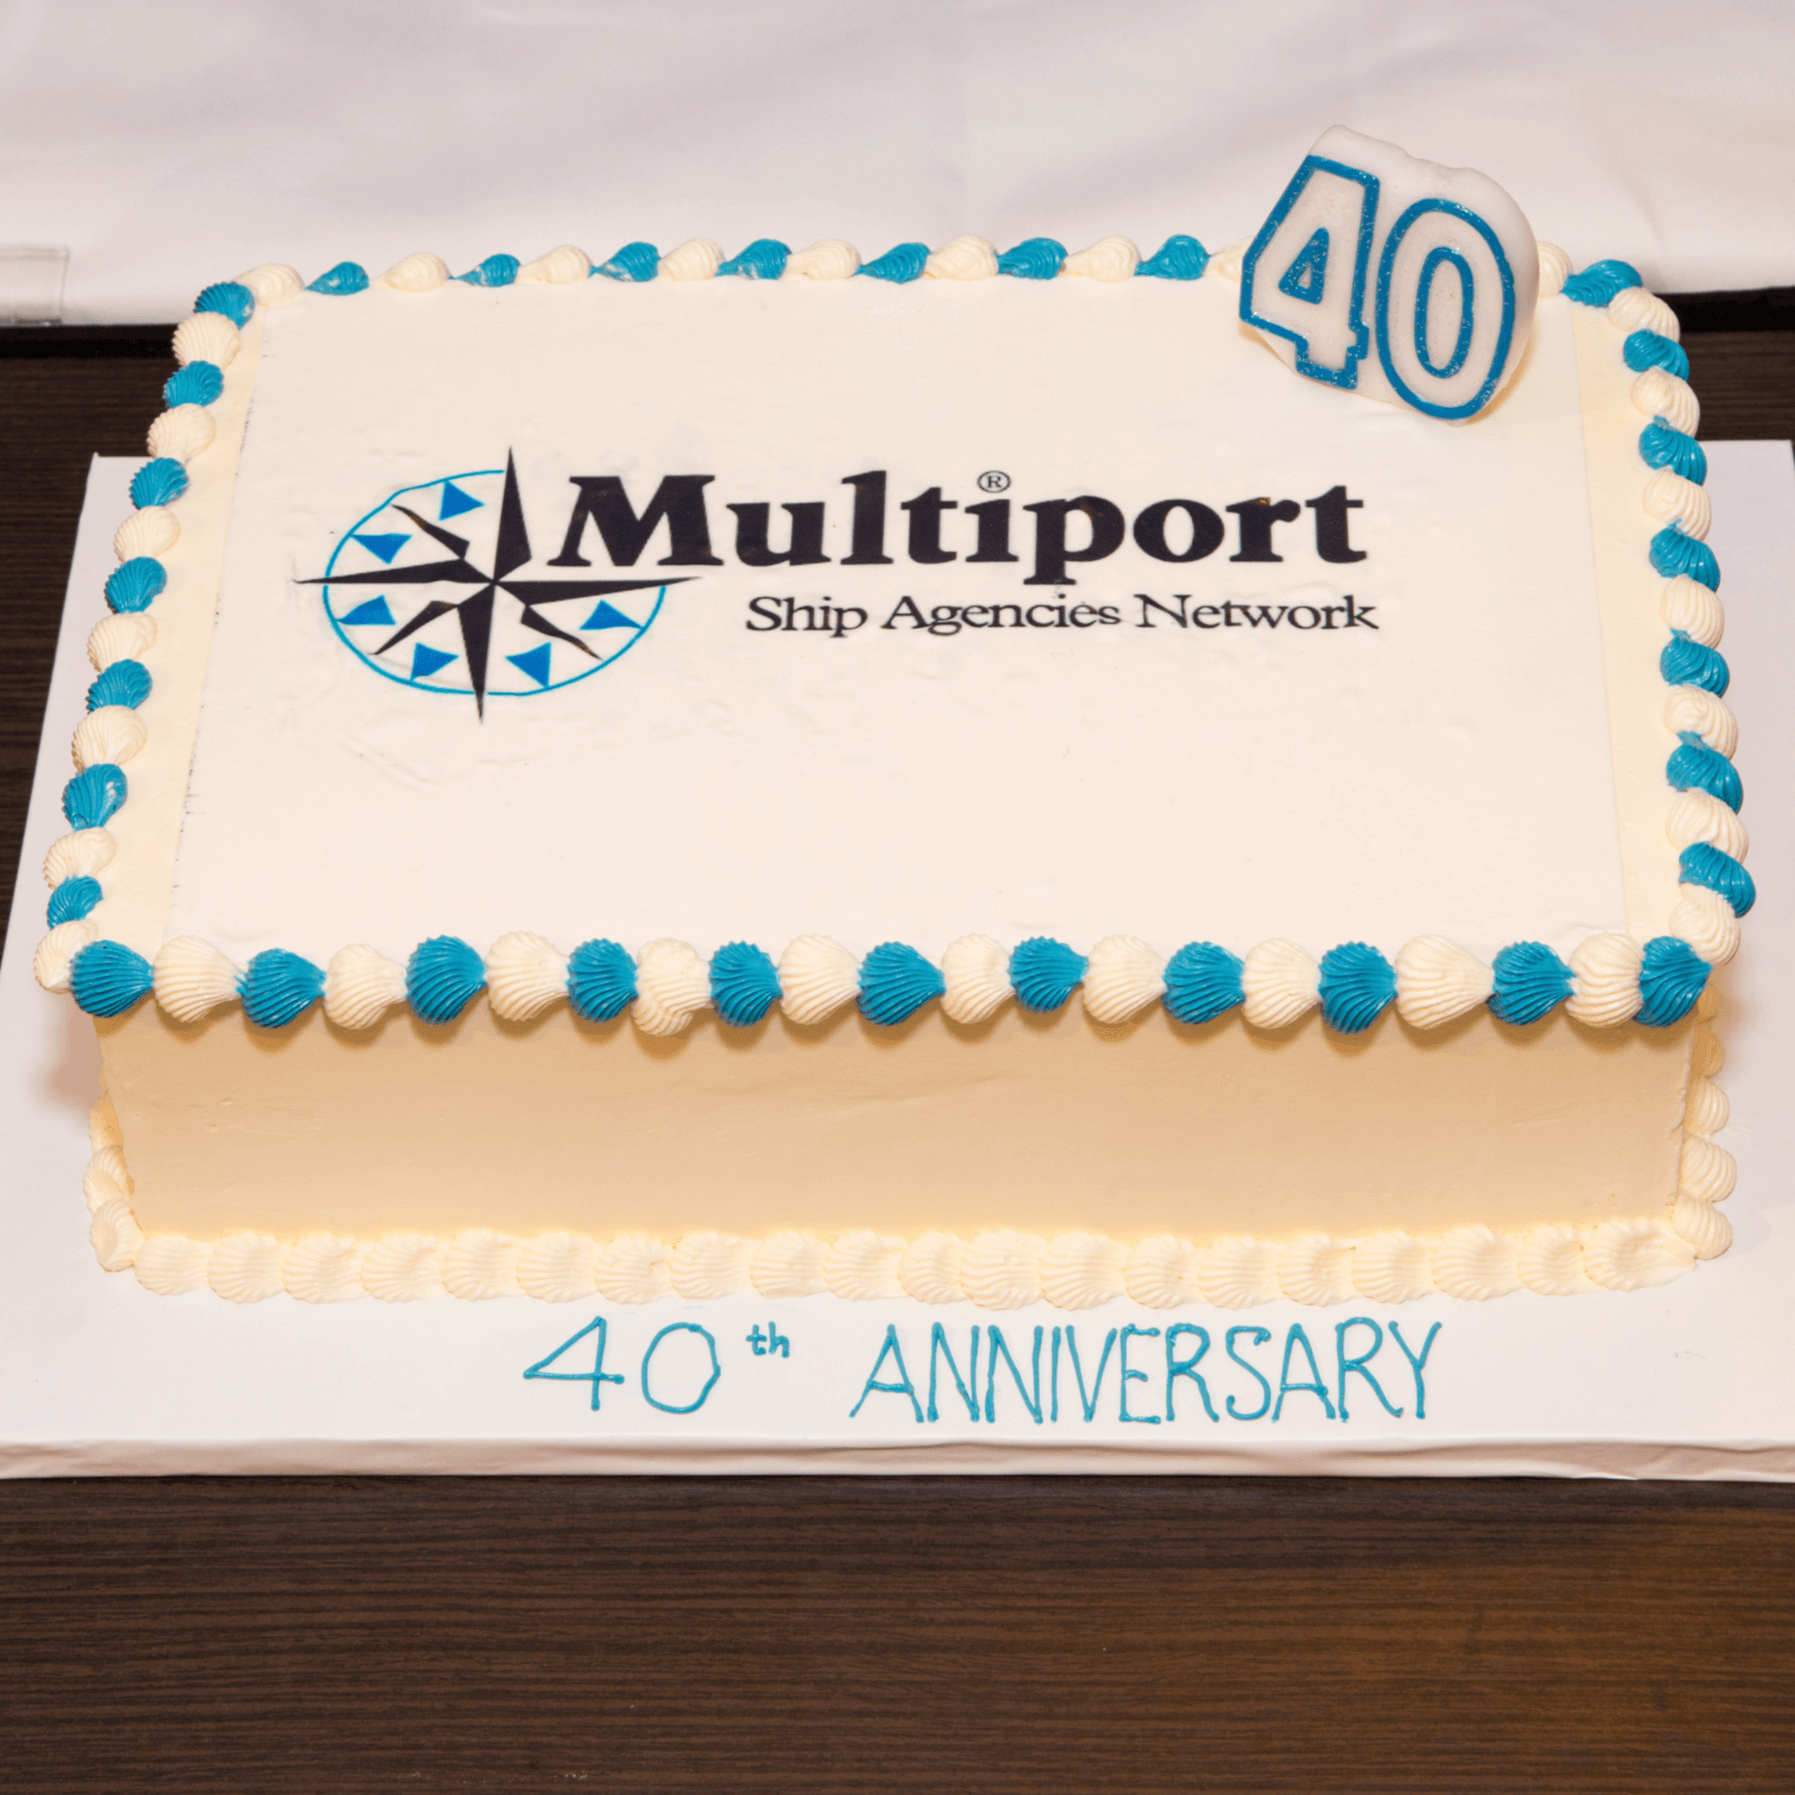 Multiport turns 40